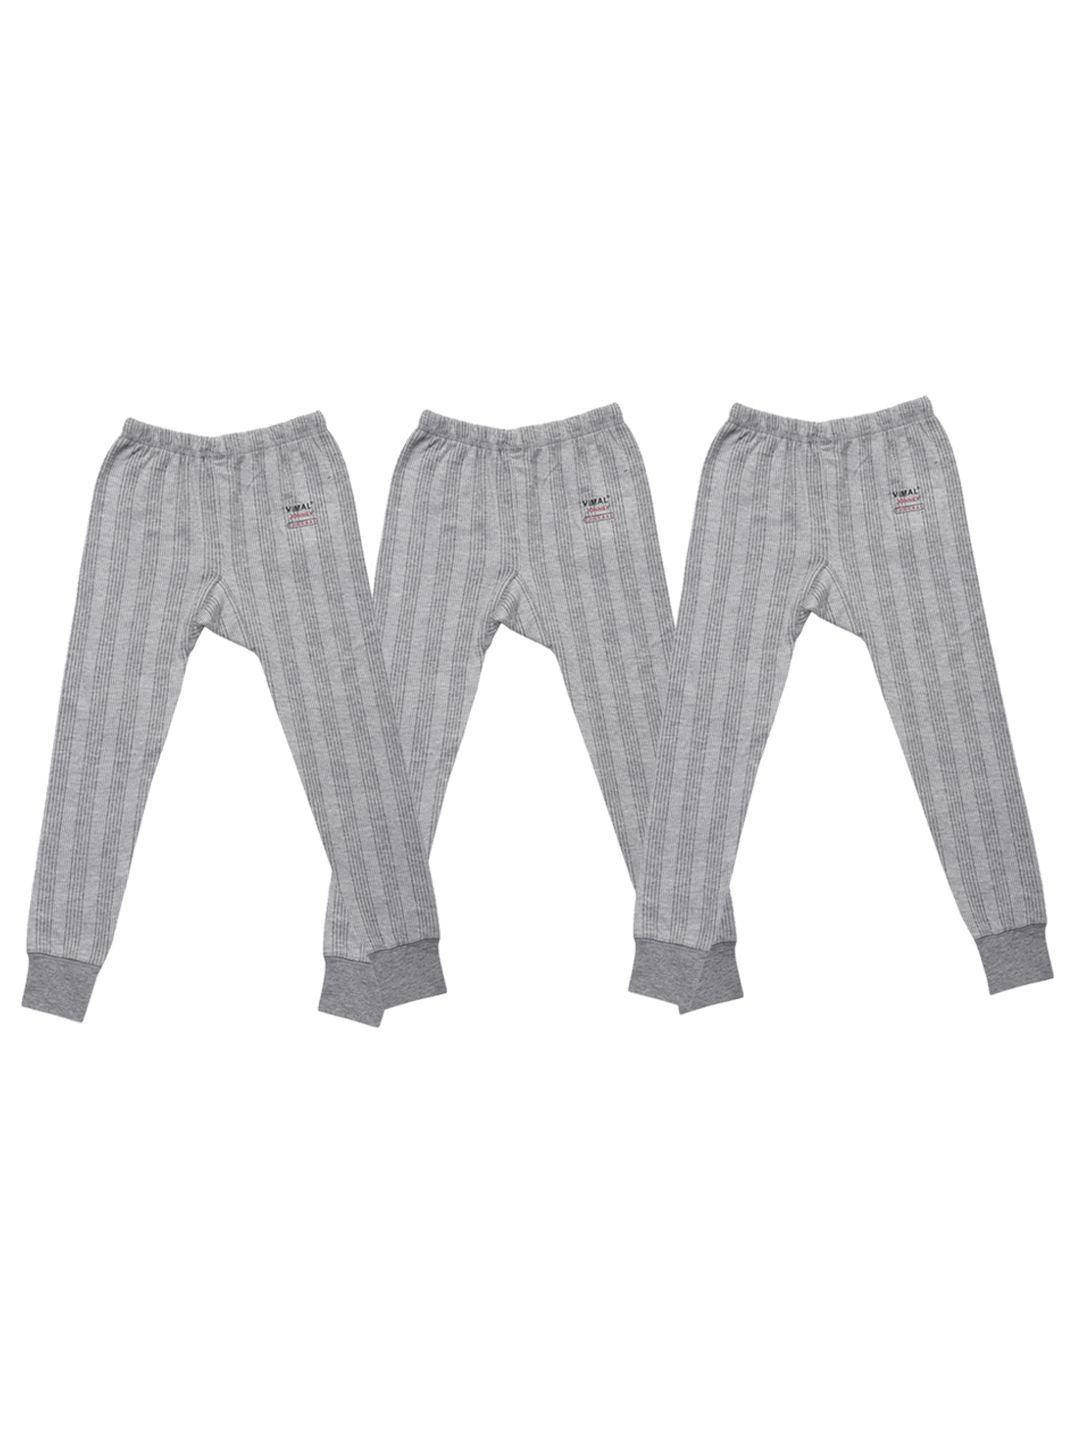 vimal jonney infants grey pack of 3 striped thermal sets